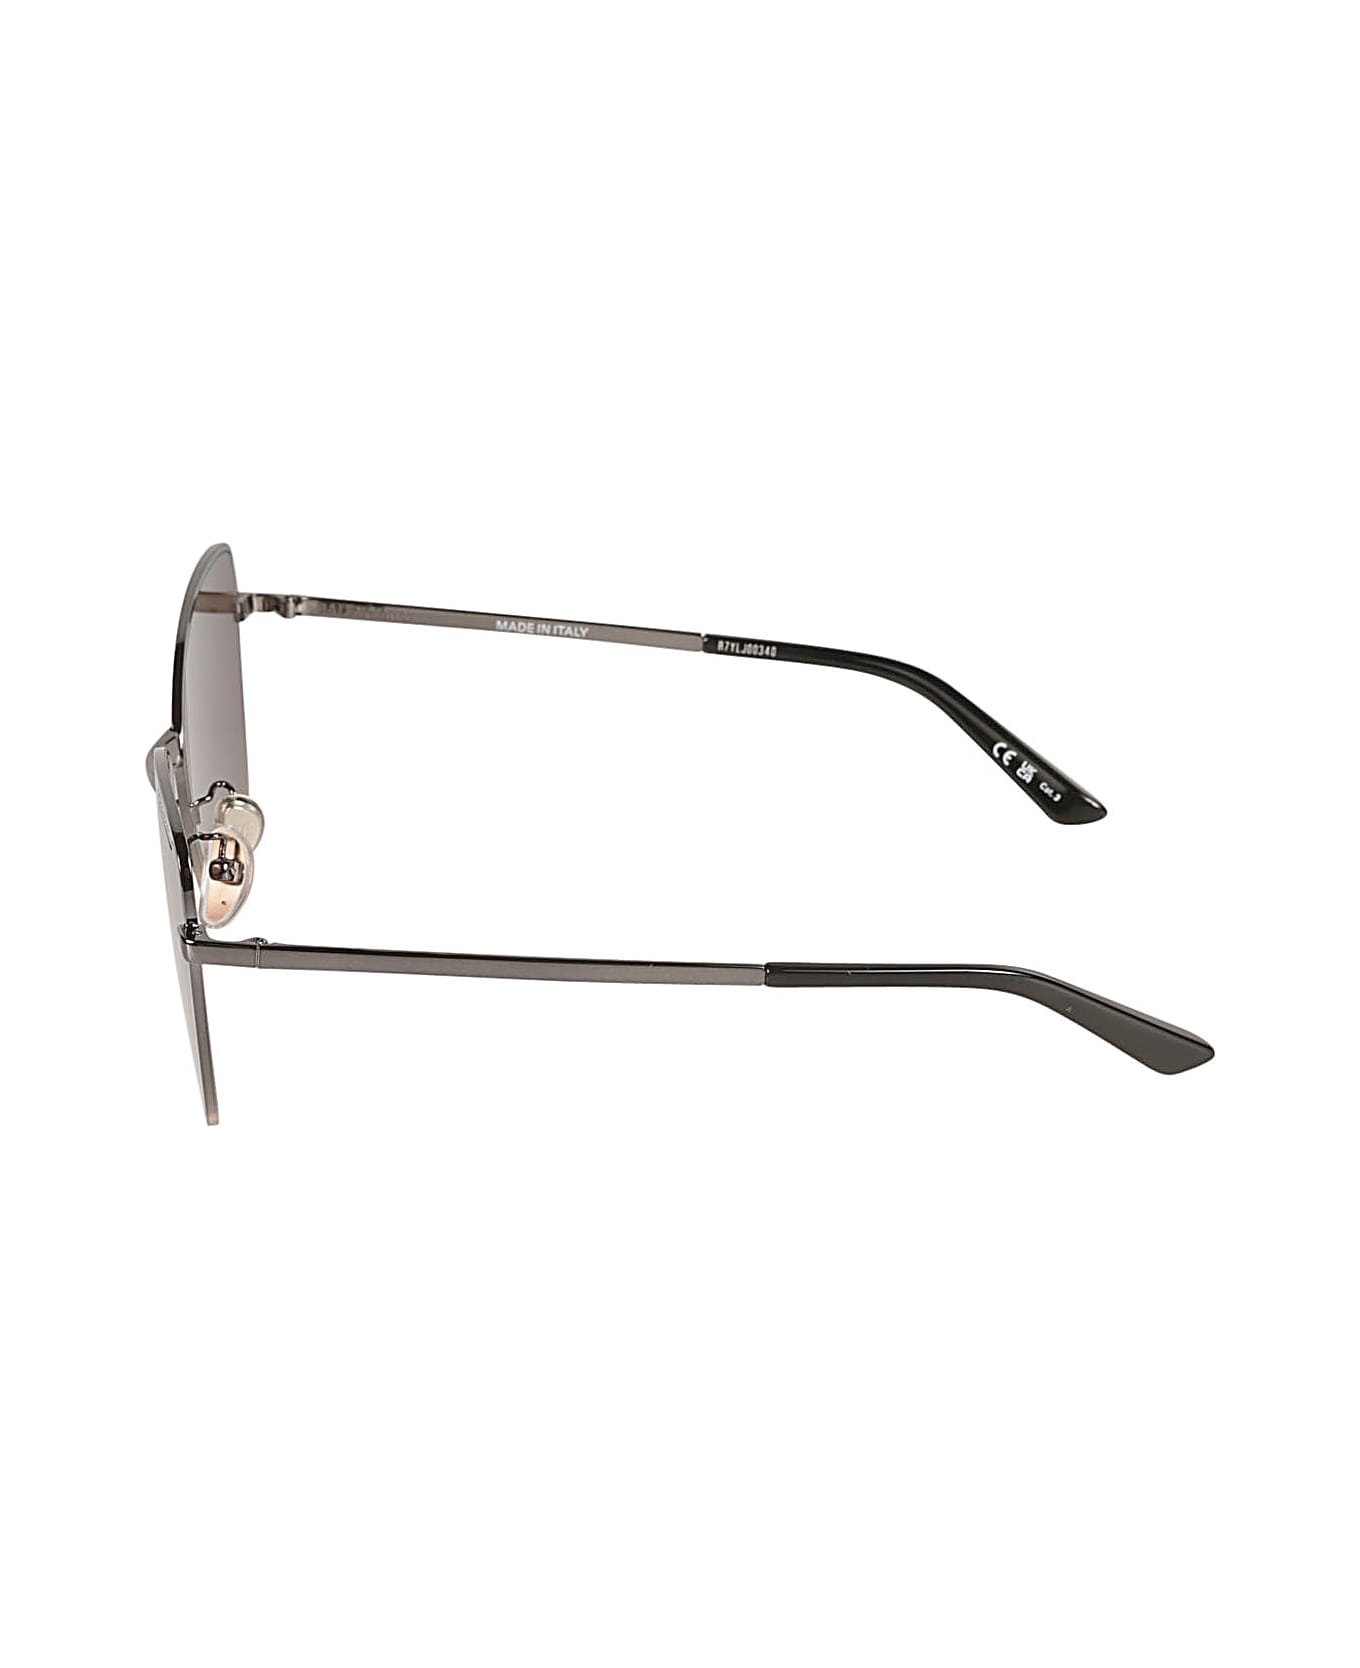 Balenciaga Eyewear Square Frame Logo Sided Sunglasses - Ruthenium/Brown